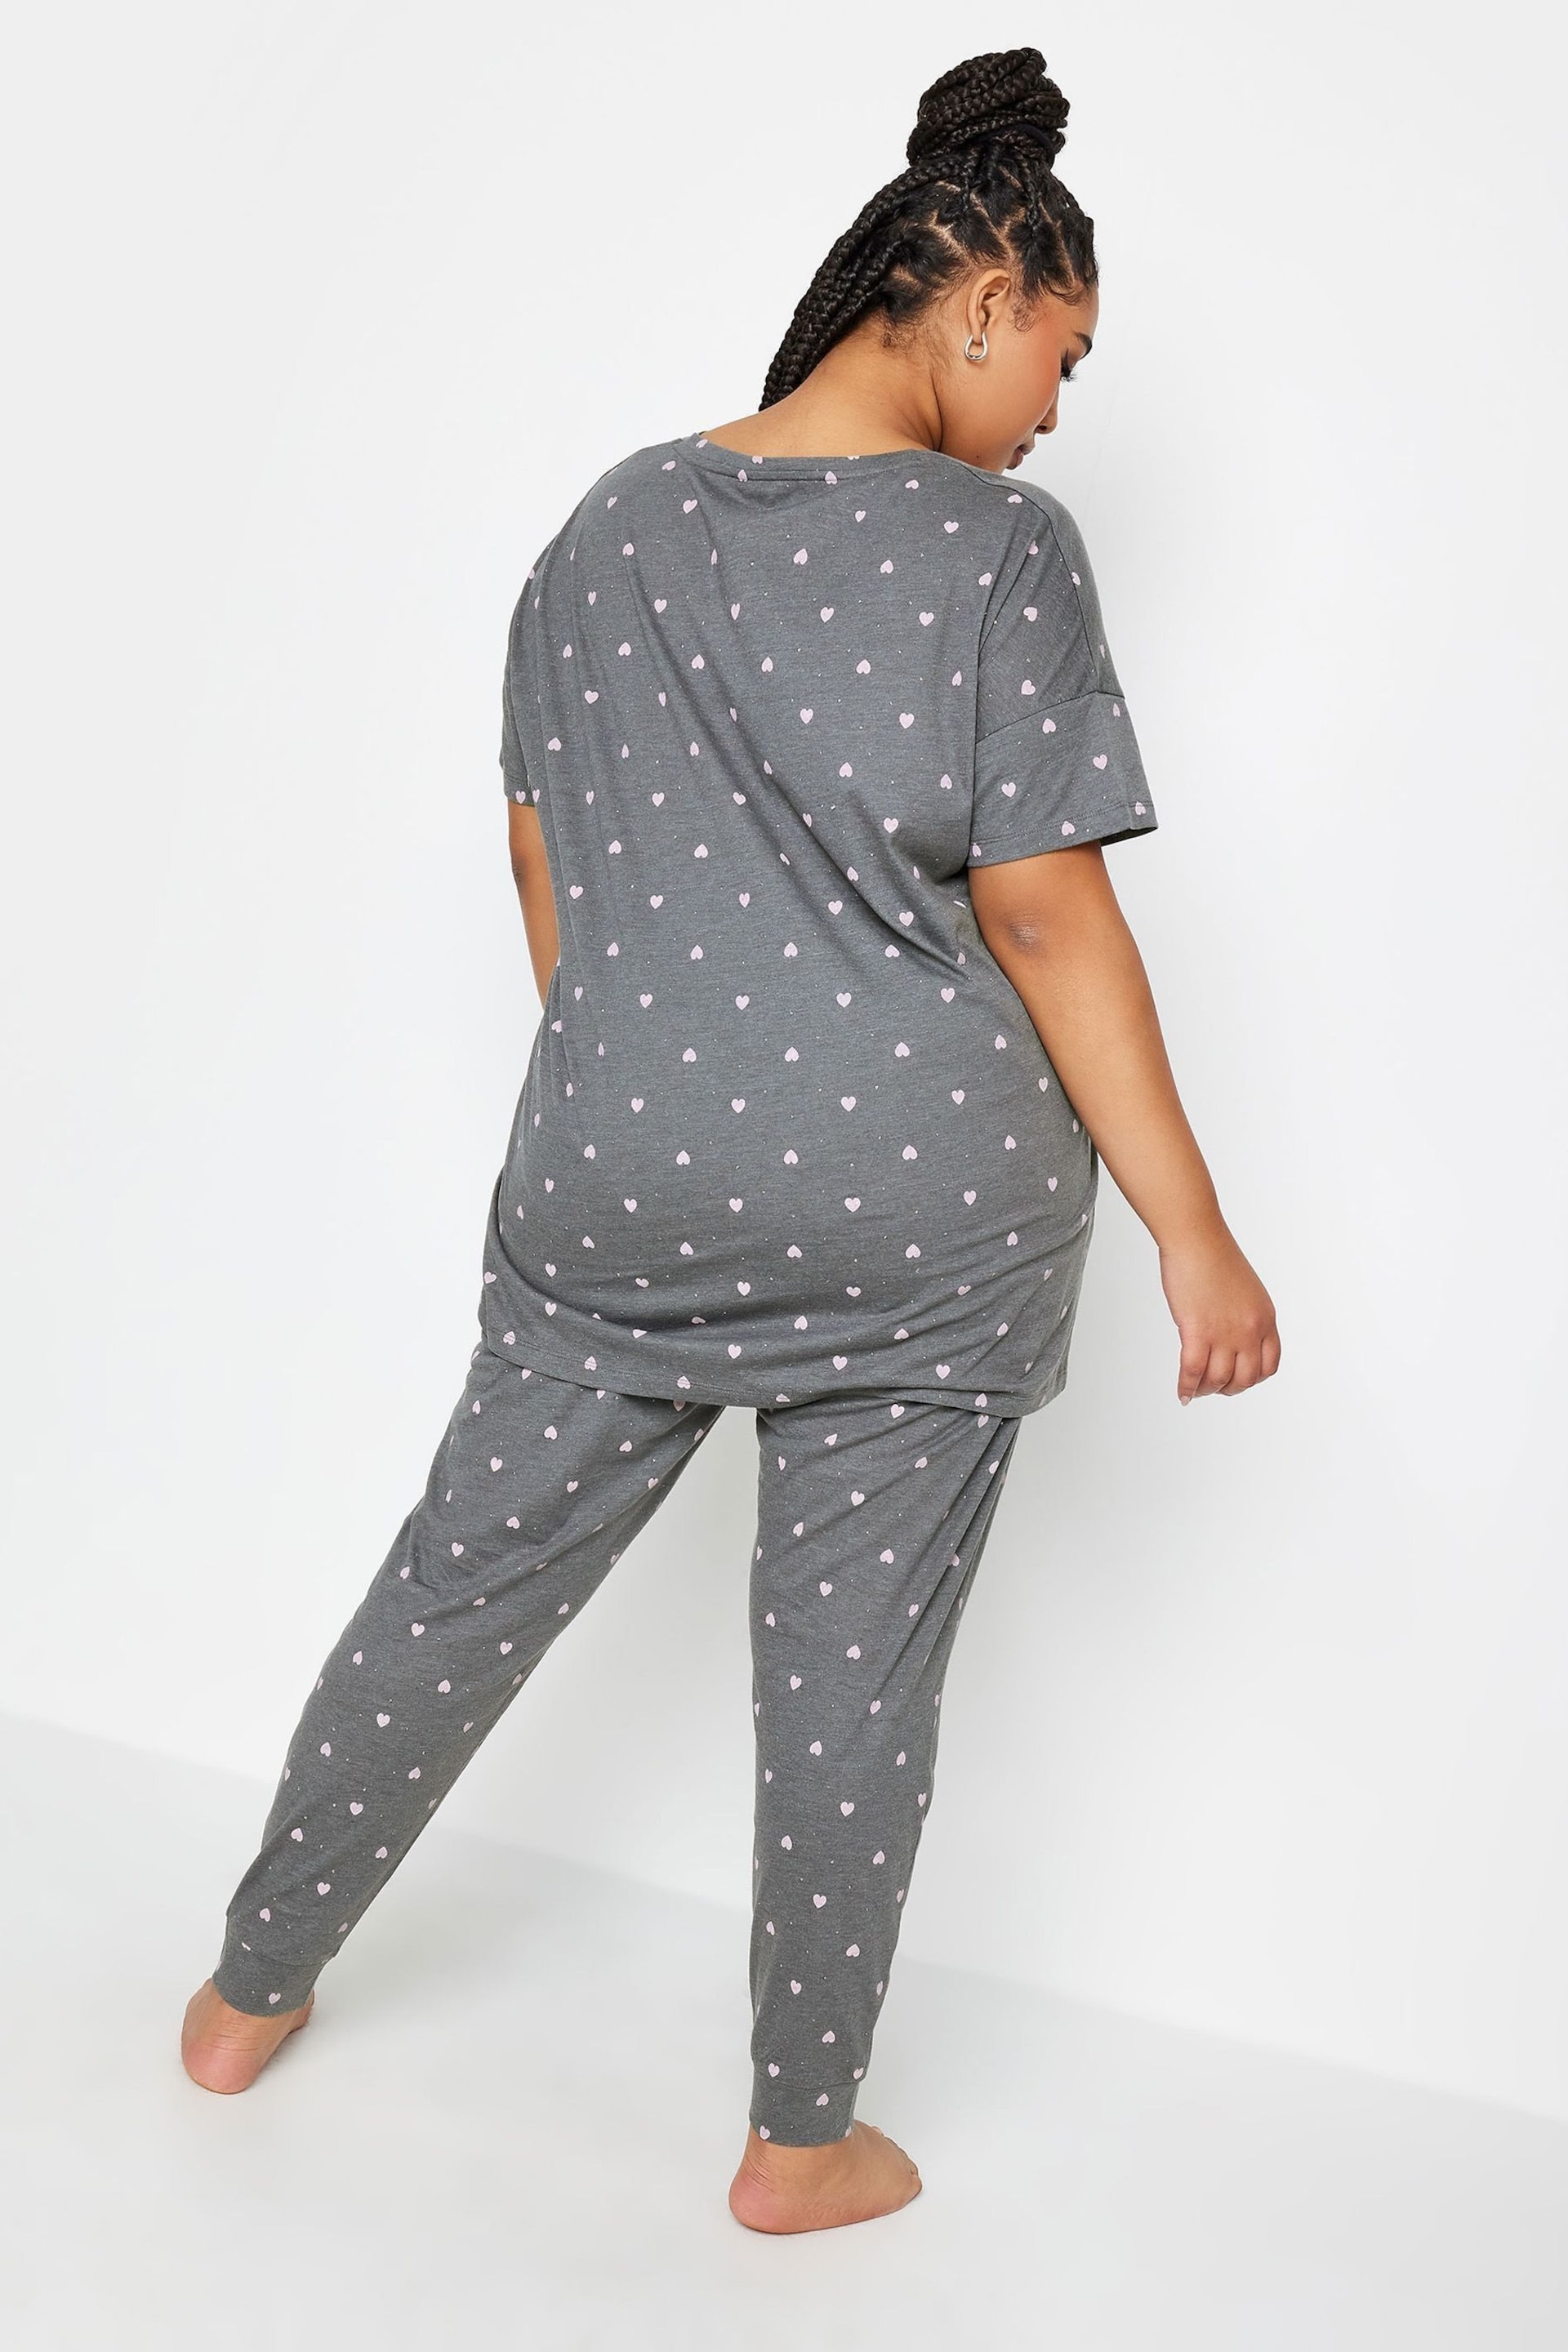 Yours Curve Grey Cuffed Pyjama Set - Image 3 of 5